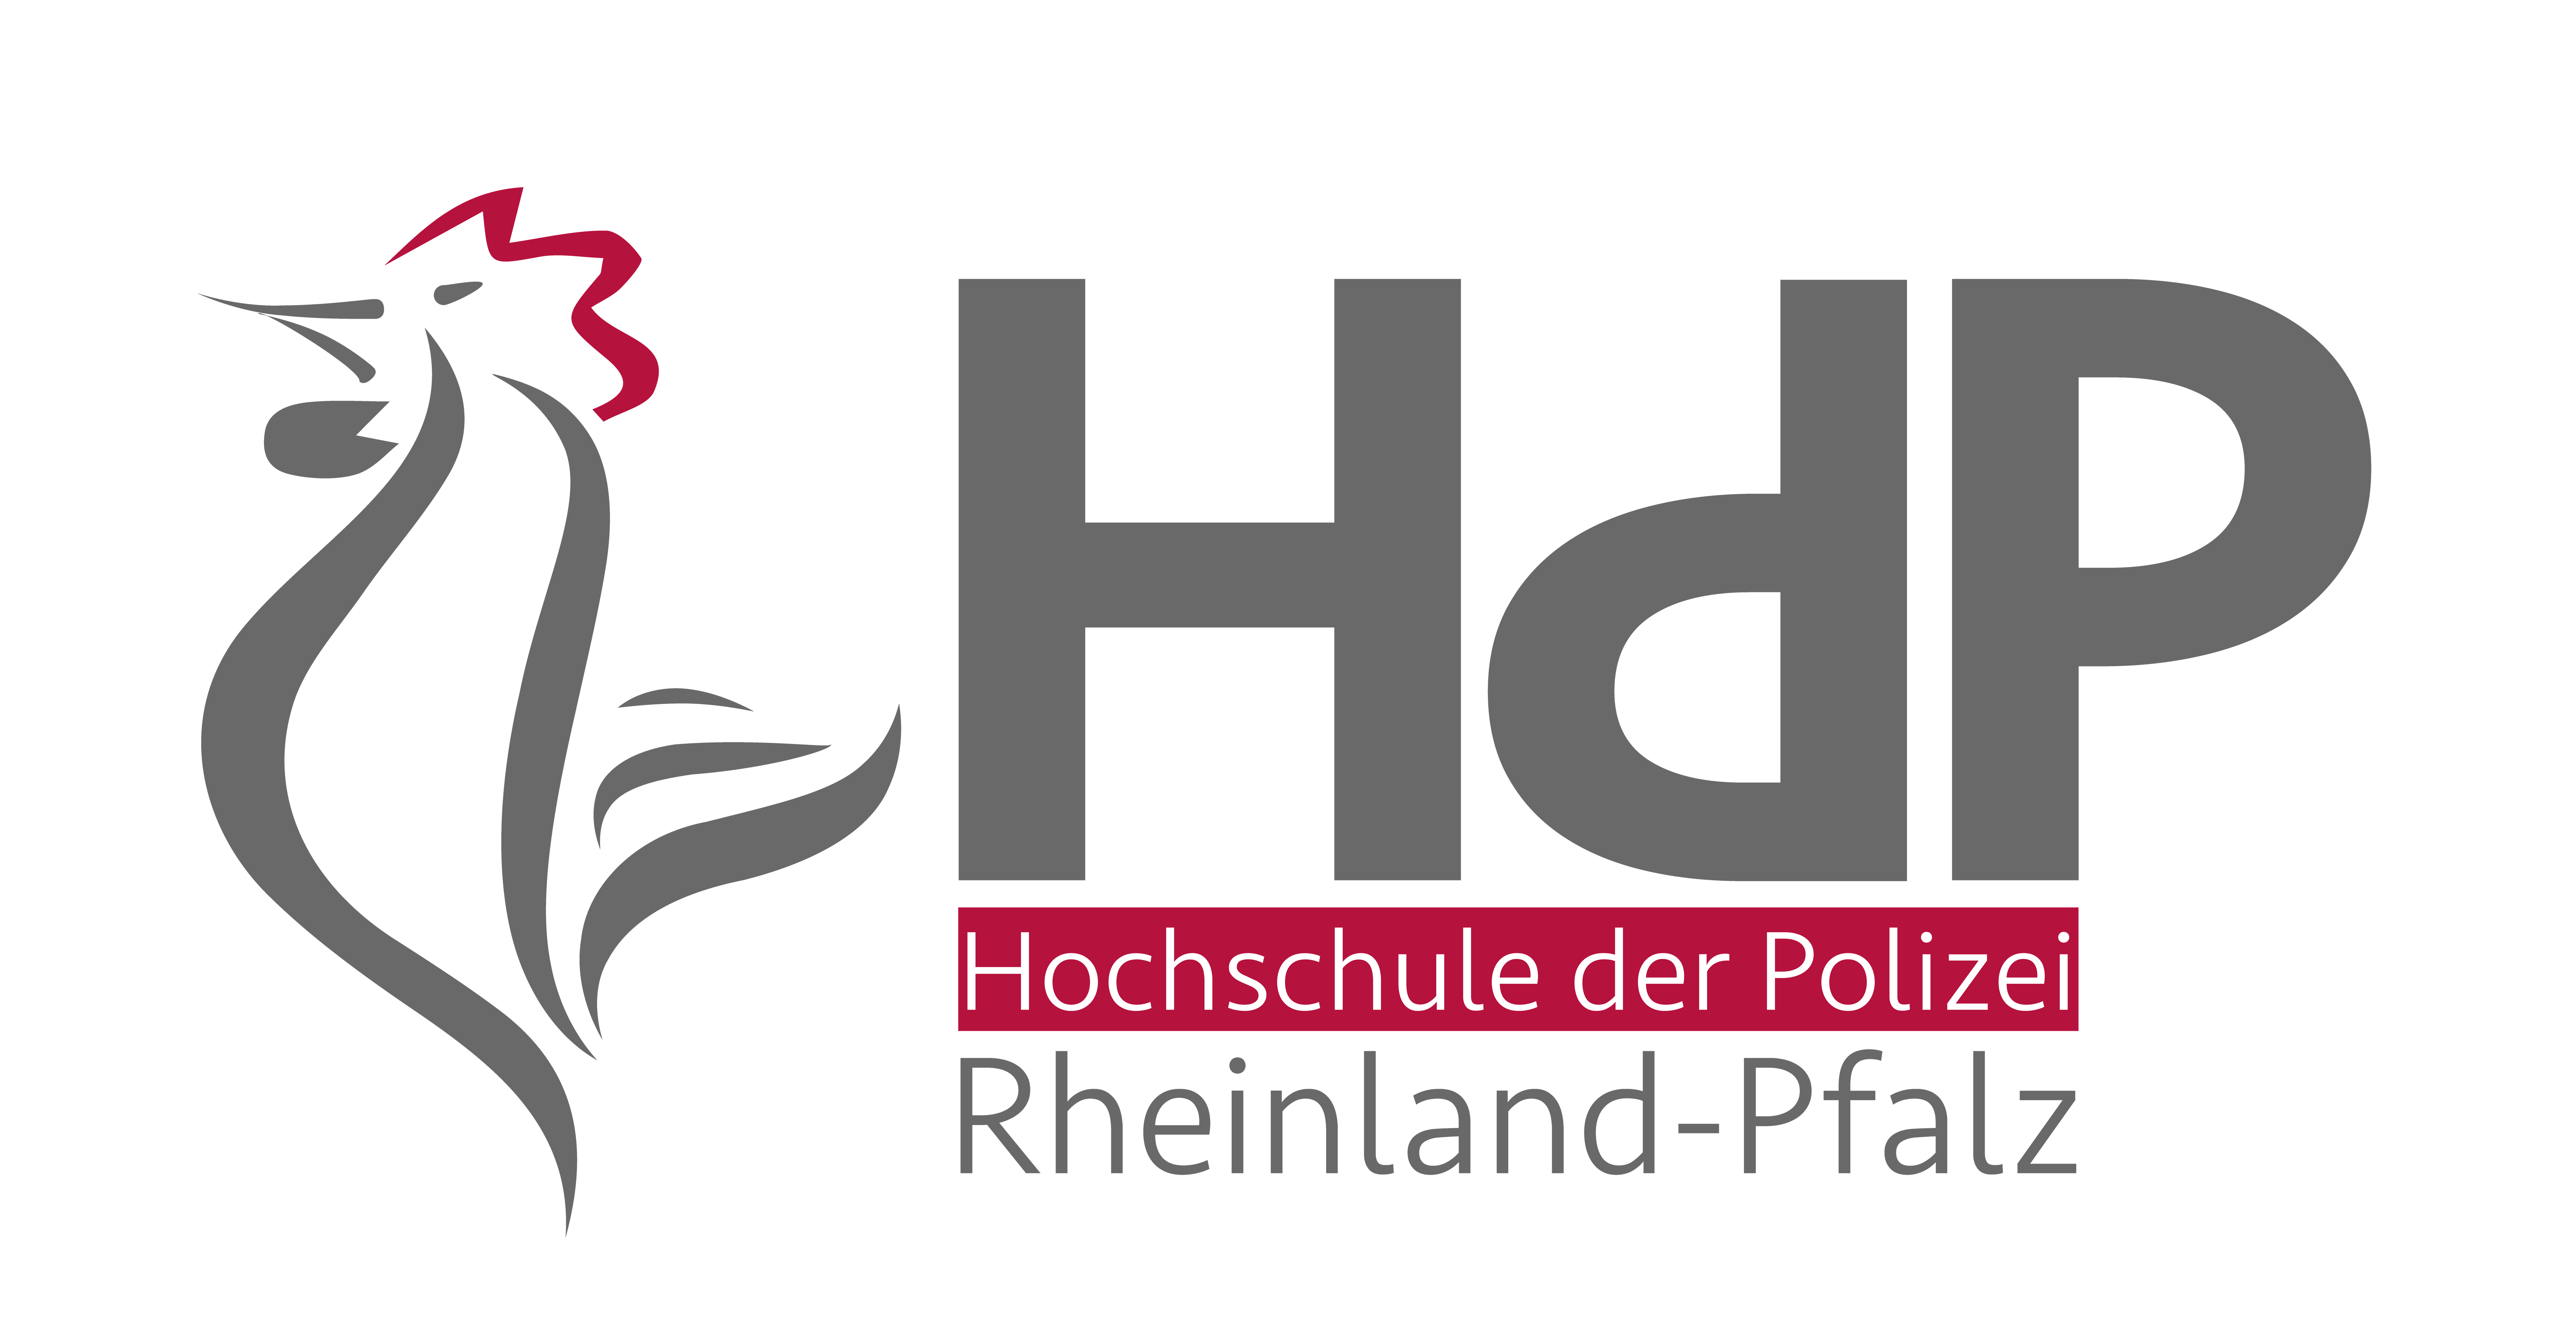 HdP_Rheinland-Pfalz_300haupt.png